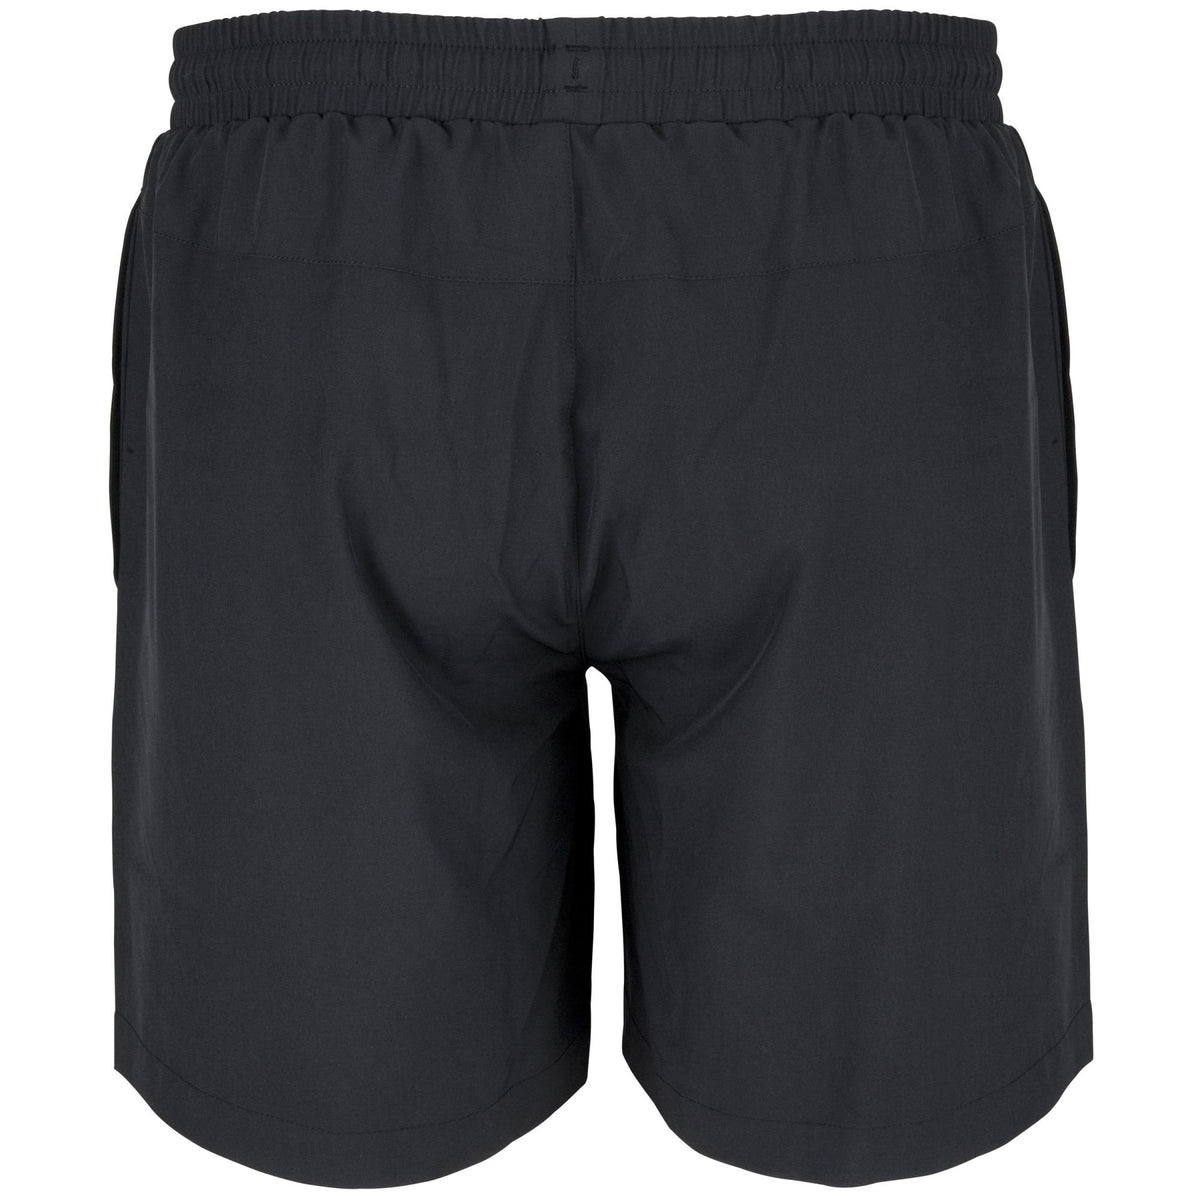 Gray Nicolls Velocity Shorts (Black) – Customkit.com